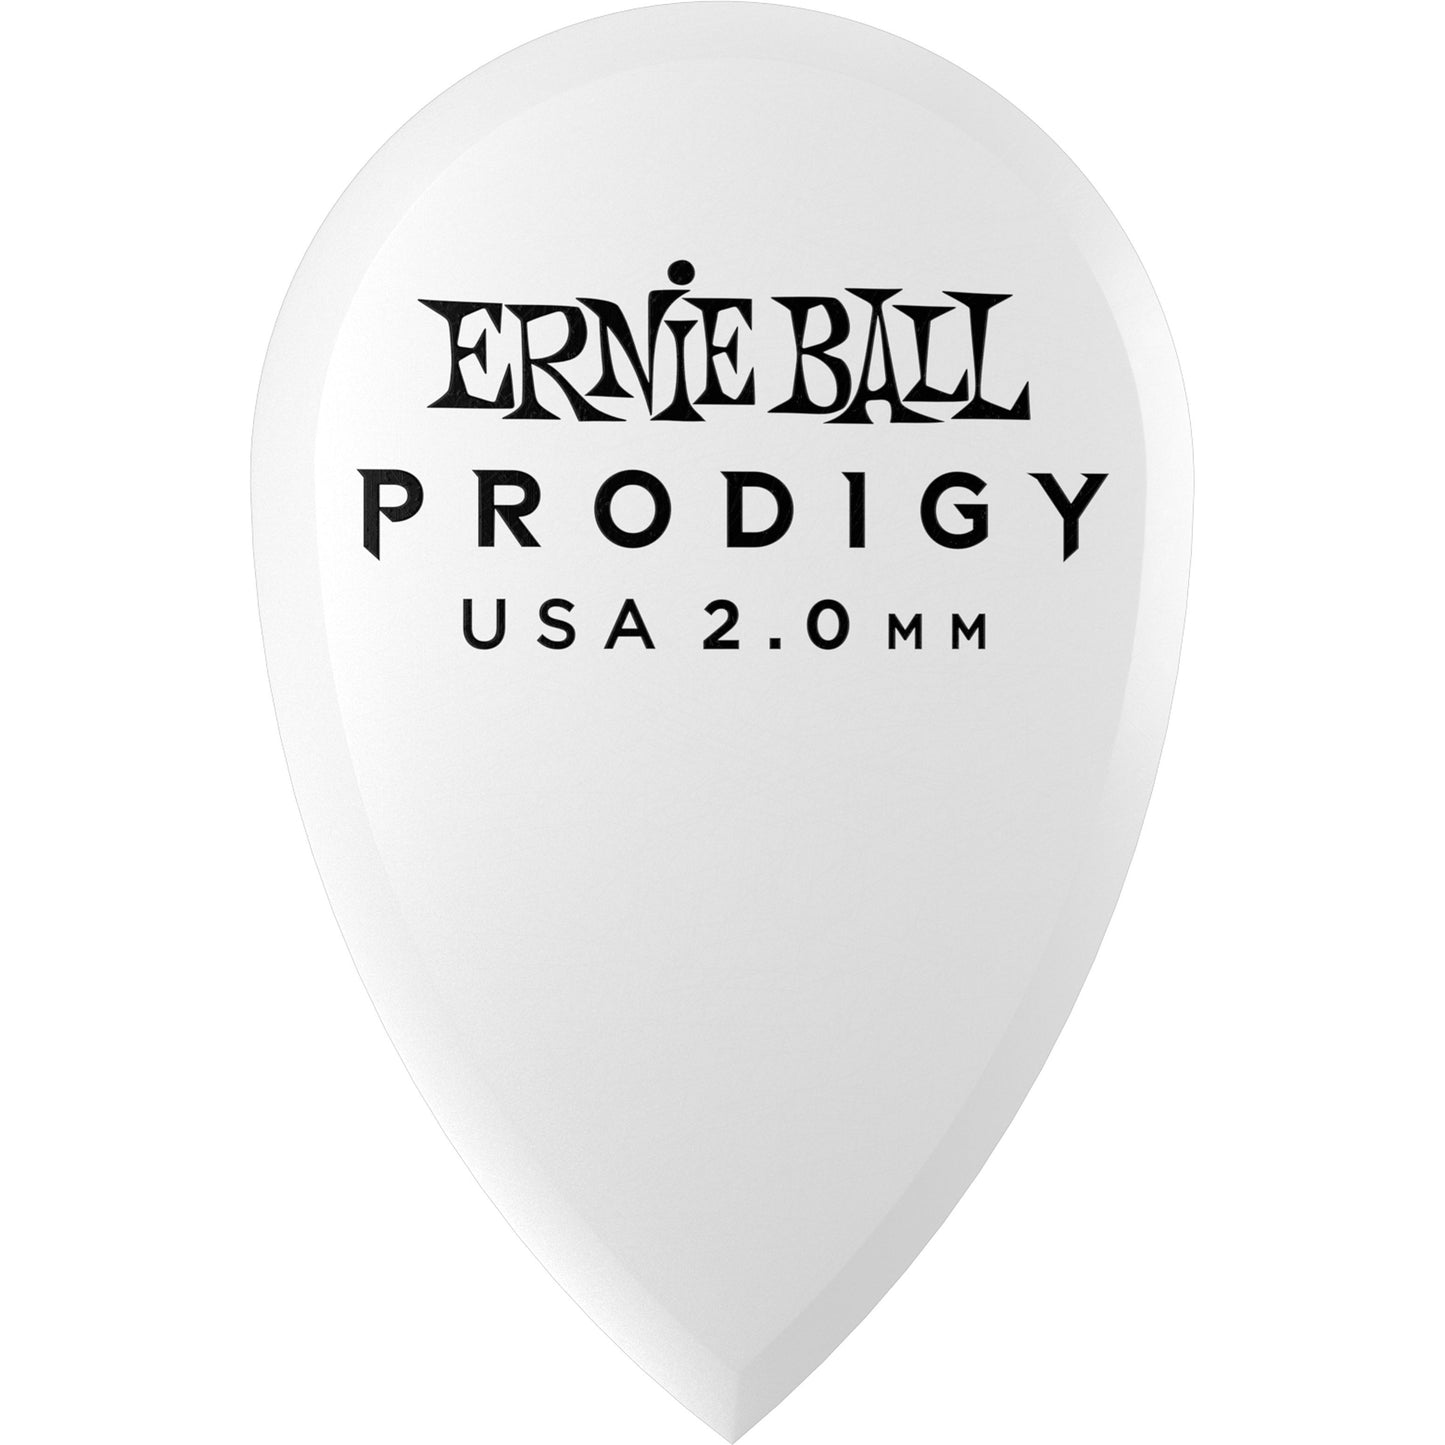 Ernie Ball Prodigy Teardrop Guitar Picks (6-Pack), White, 6-Pack, 2mm